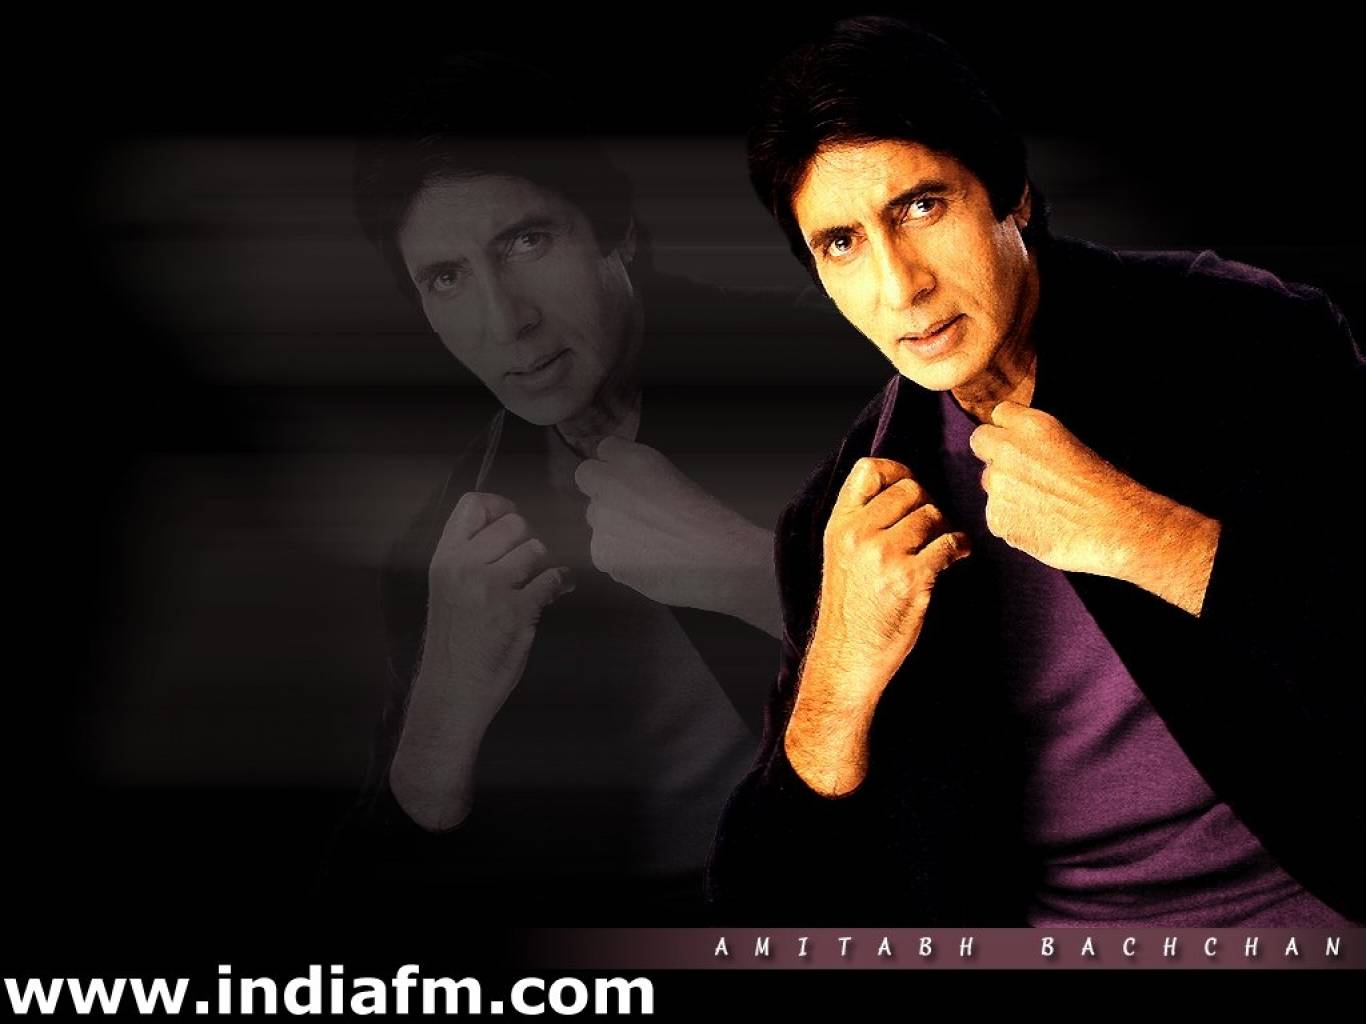 Amitabh Bachchan HD Wallpaper. Latest Amitabh Bachchan Wallpaper HD Free Download (1080p to 2K)